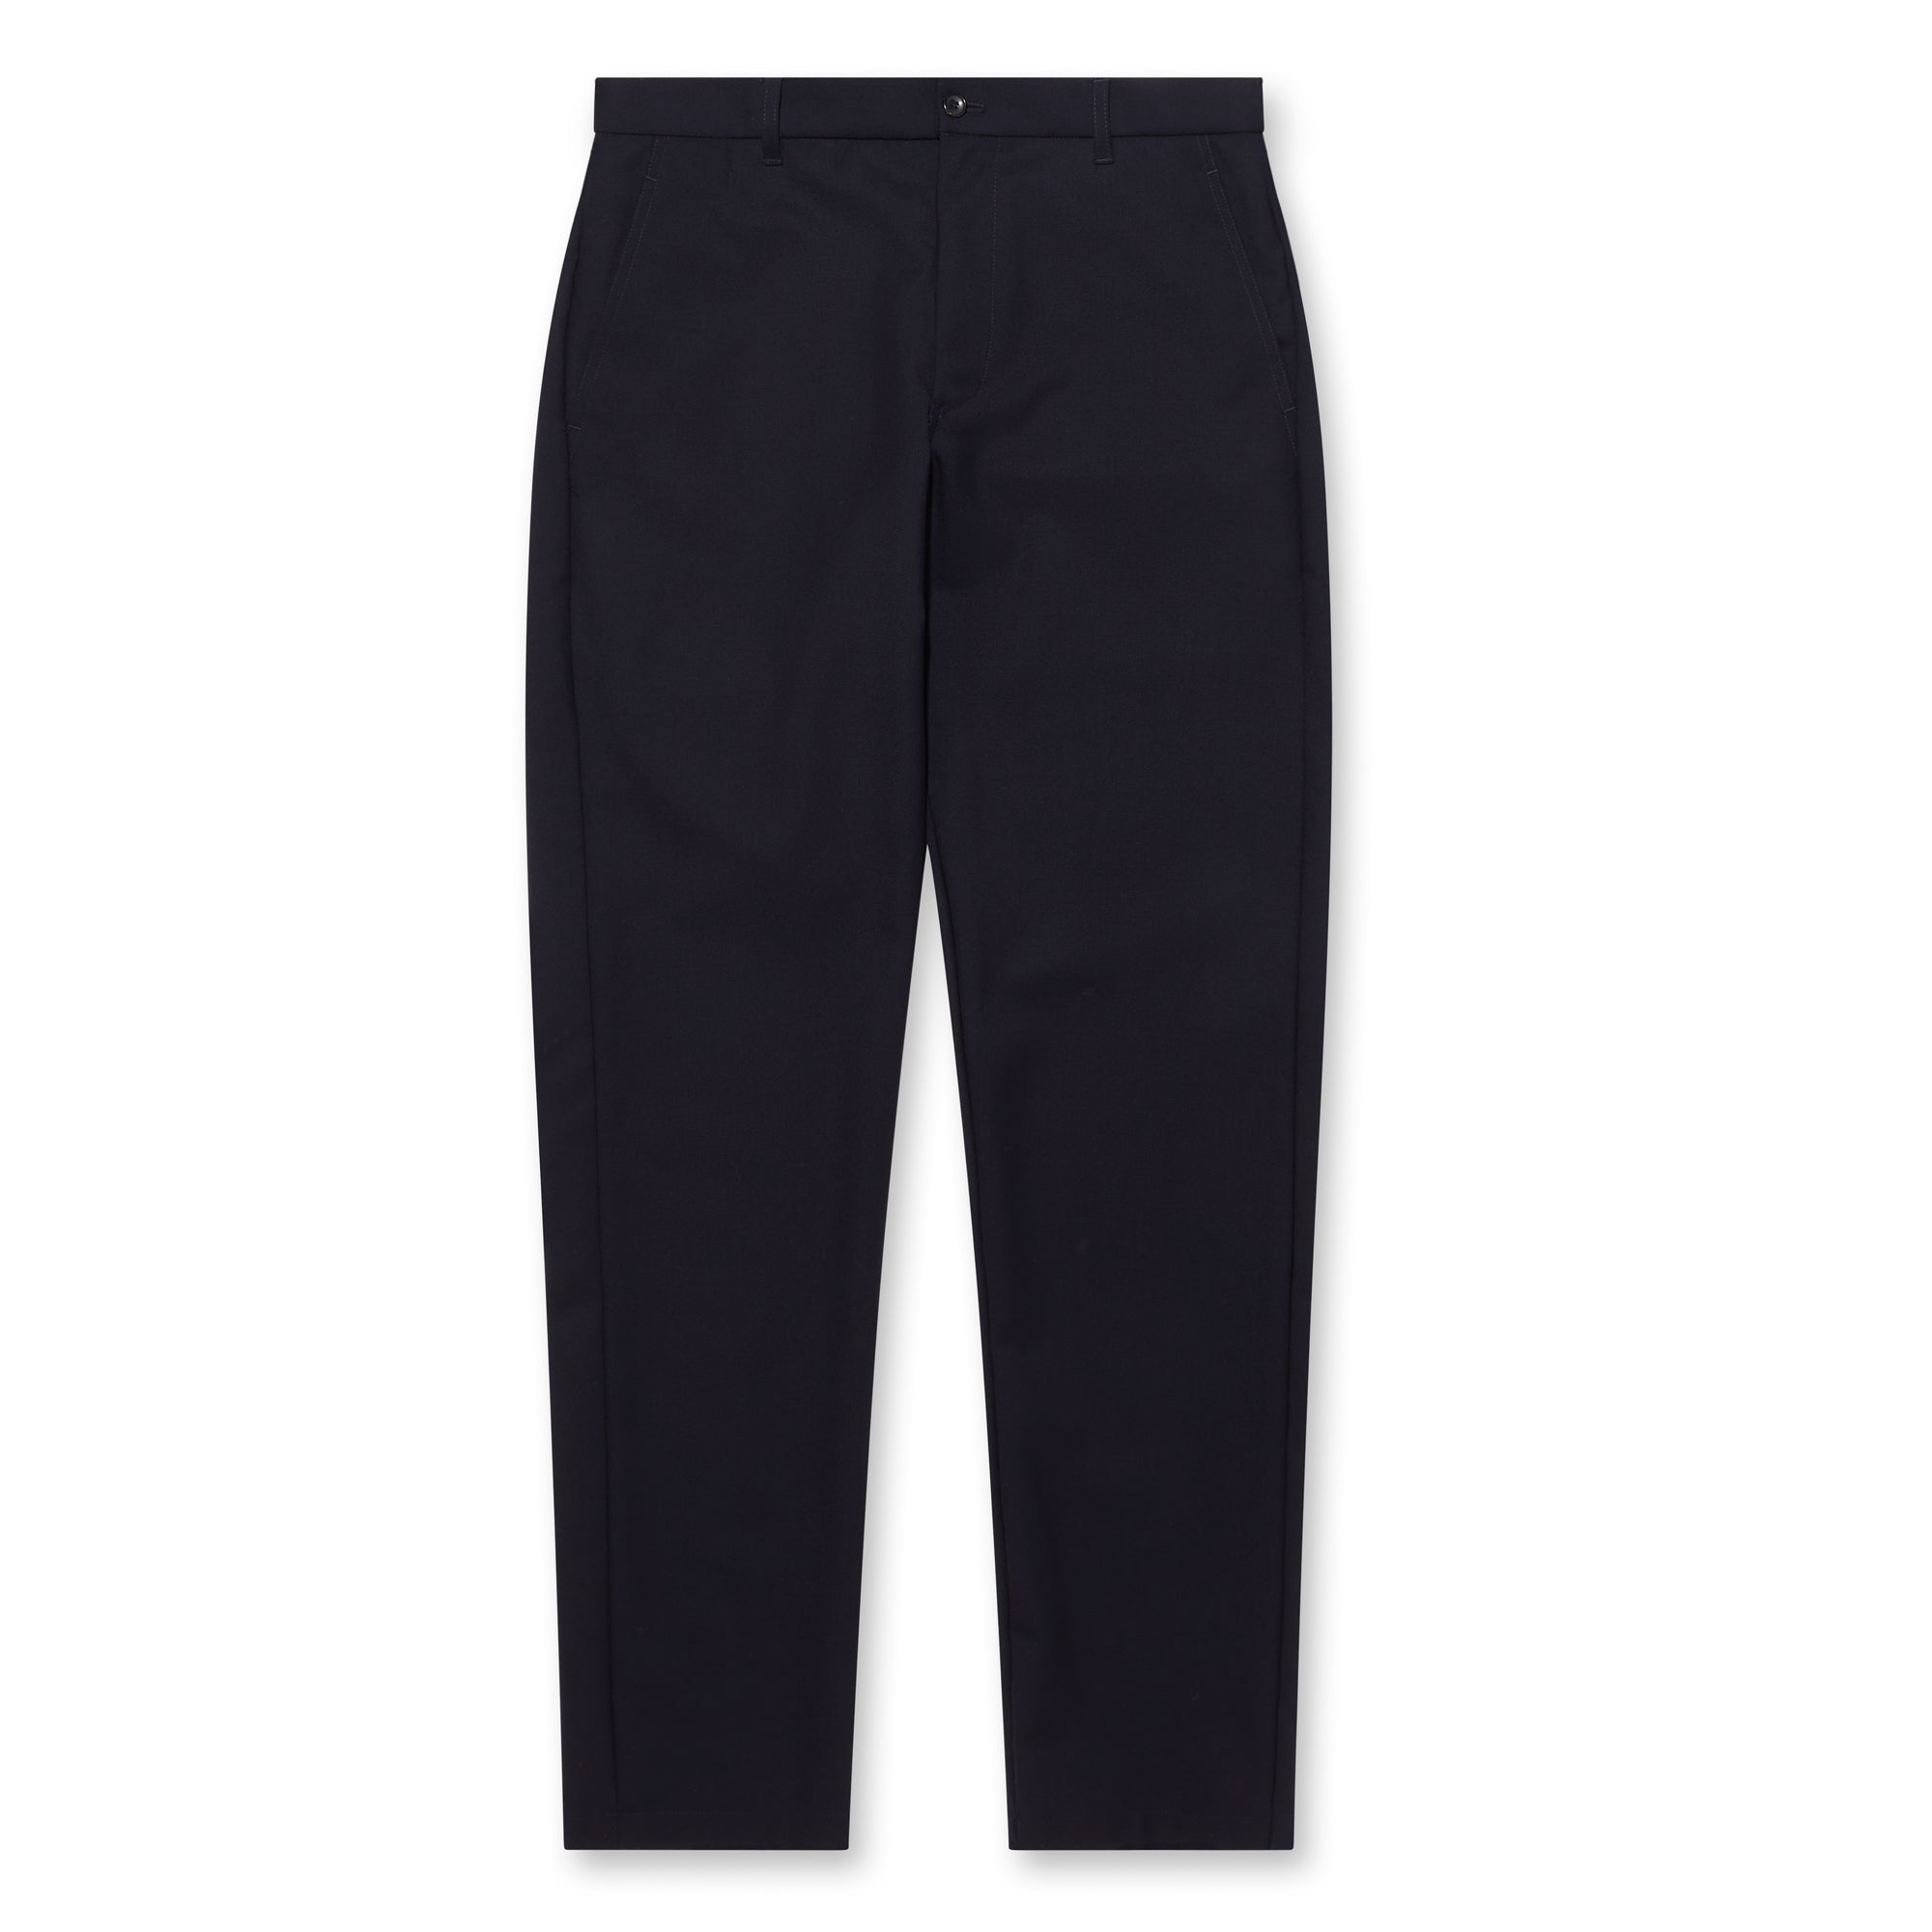 CDG Shirt - Men’s Wool Broadcloth Pants - (Navy) view 5